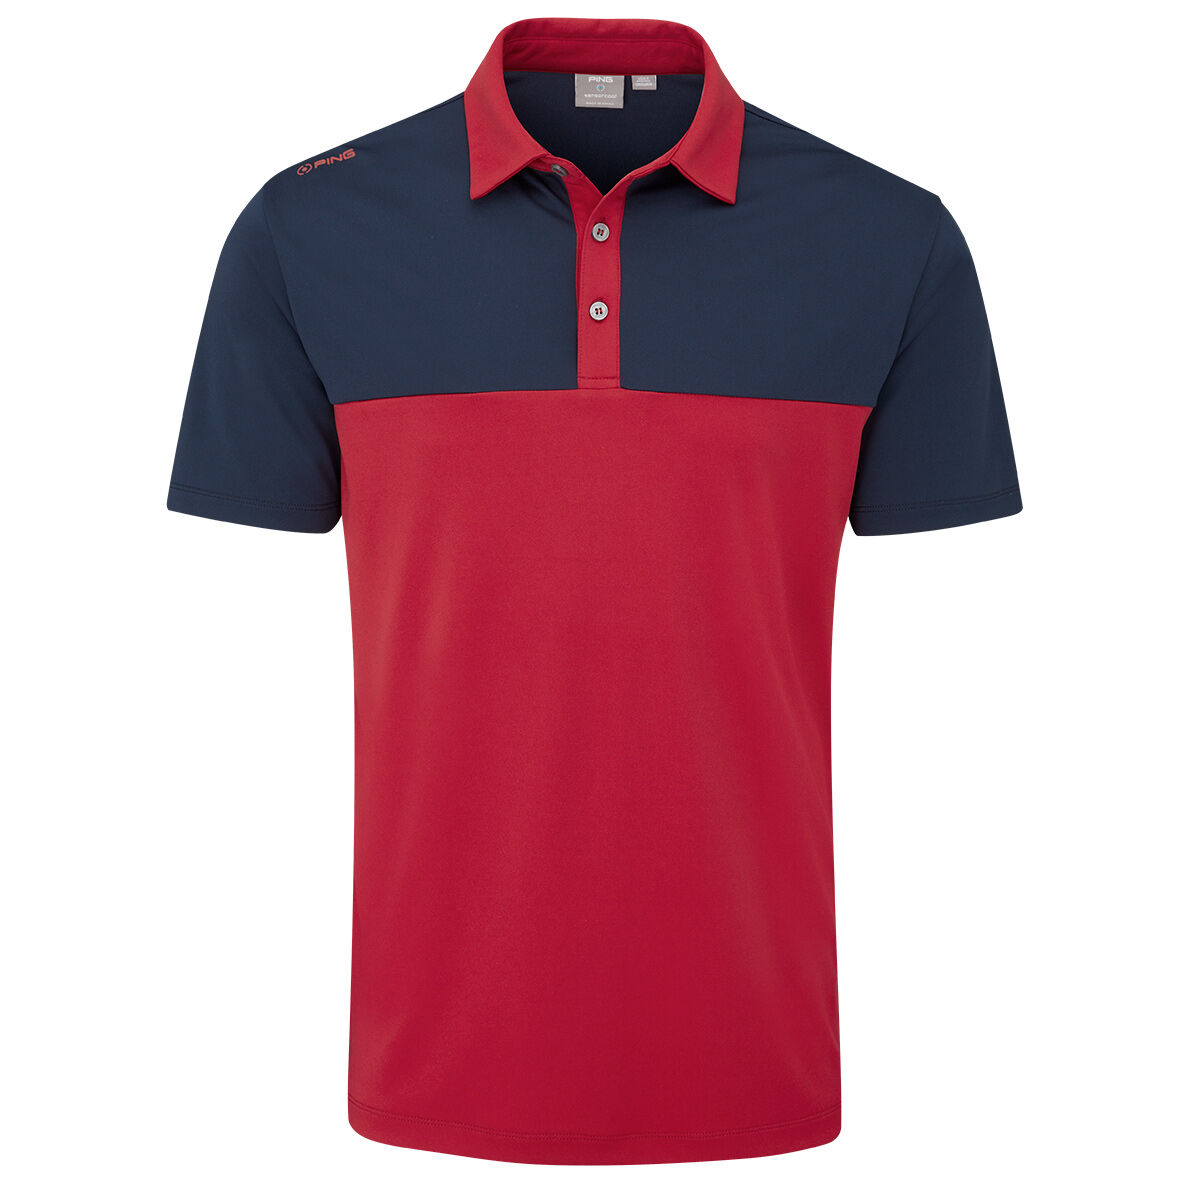 PING Men’s Bodi Panel Golf Polo Shirt, Mens, Rich red/navy, Xxl | American Golf